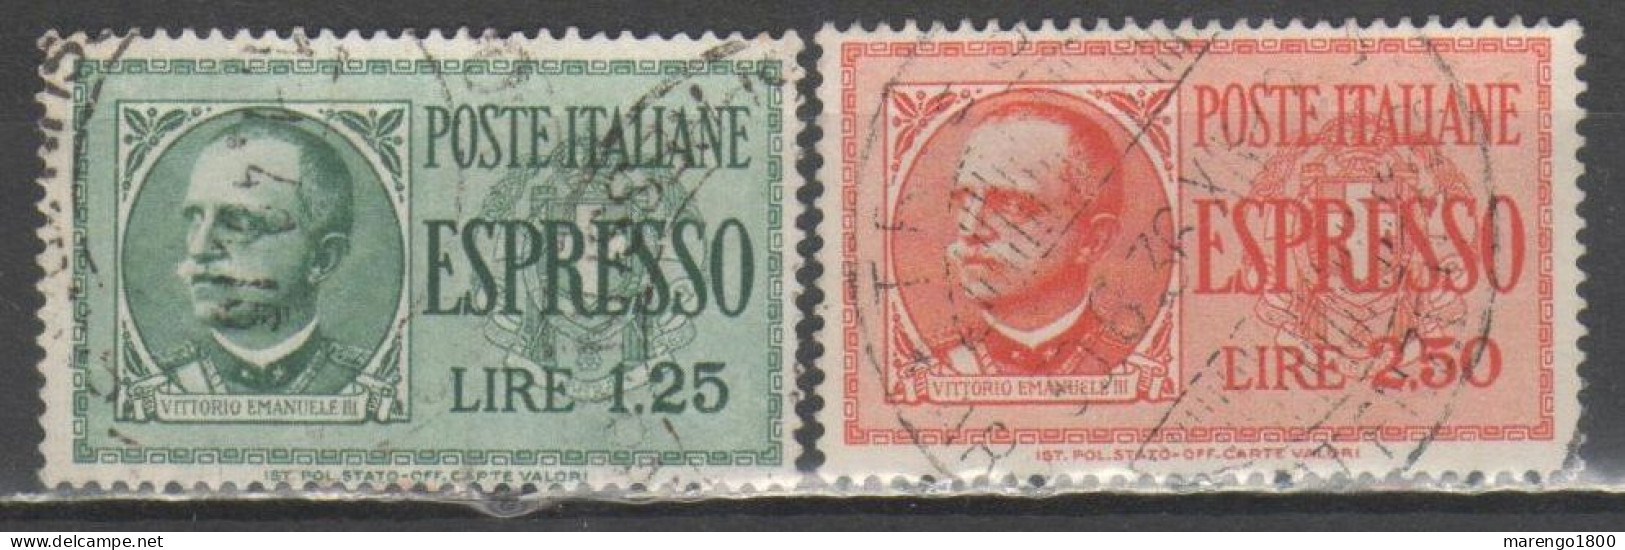 ITALIA 1932-33 - Espressi - Express Mail